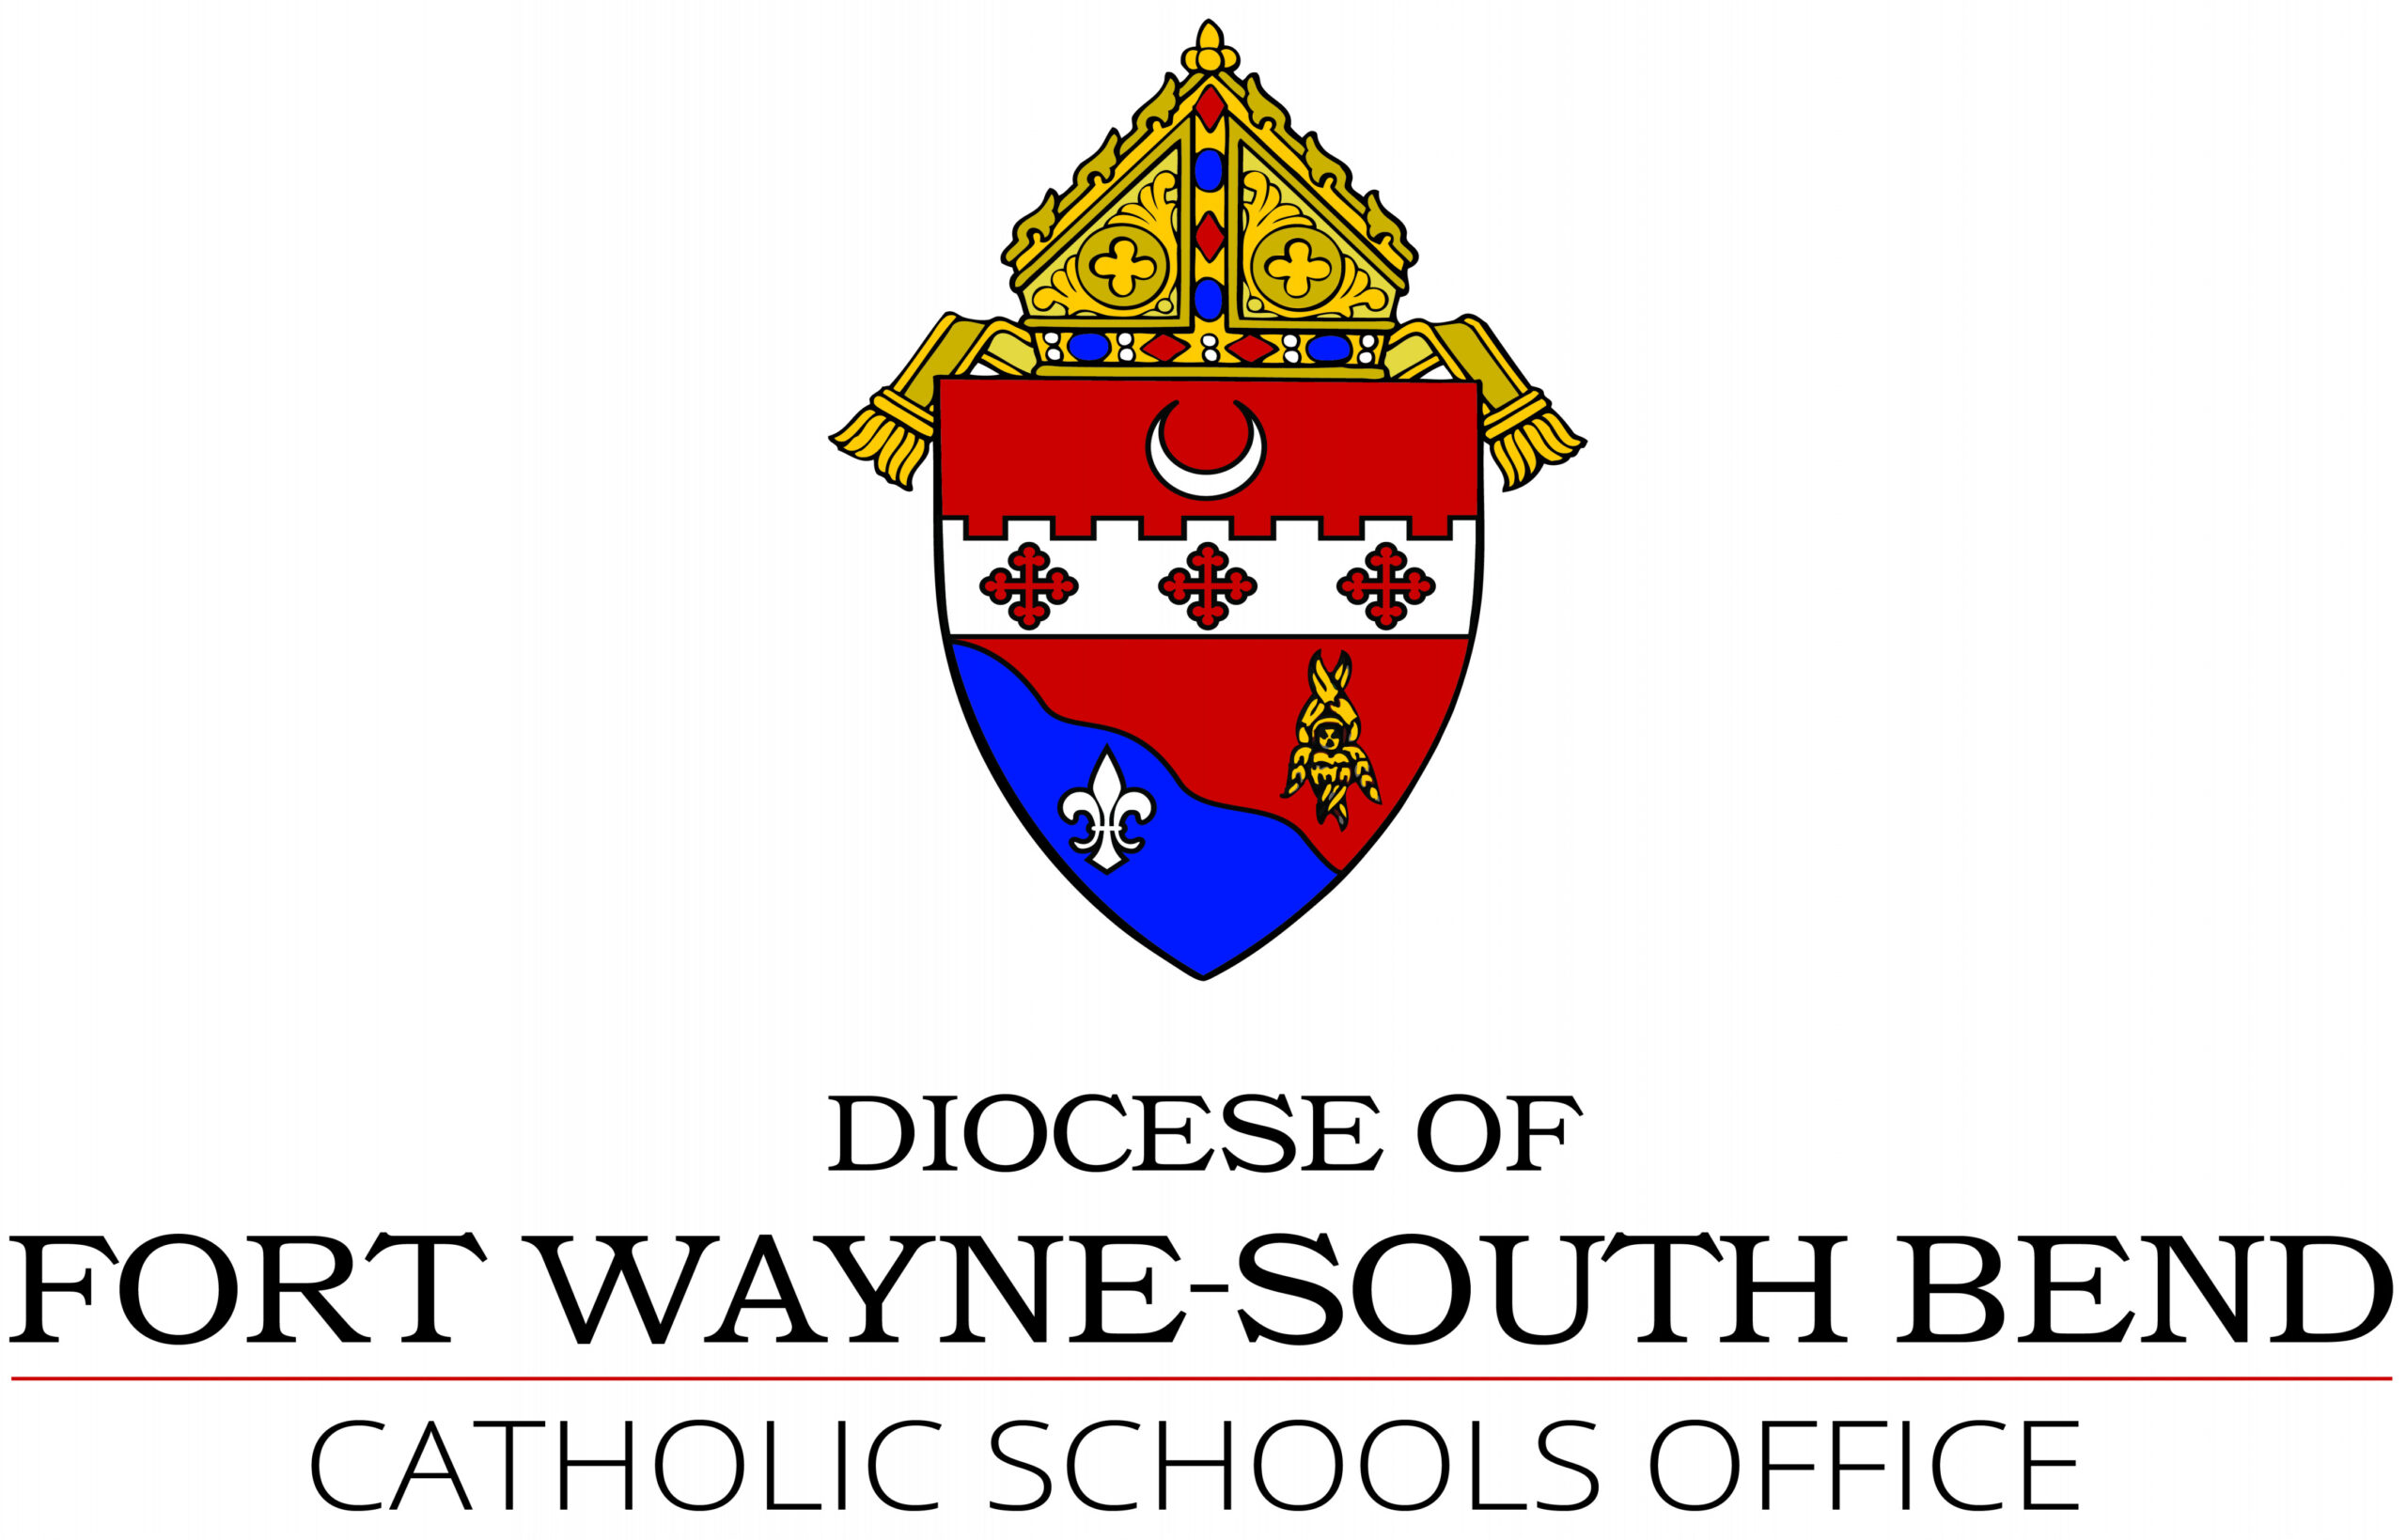 South Bend Fort Wayne Diocese Jobs - Job Openings In South Bend & Fort Wayne Diocese